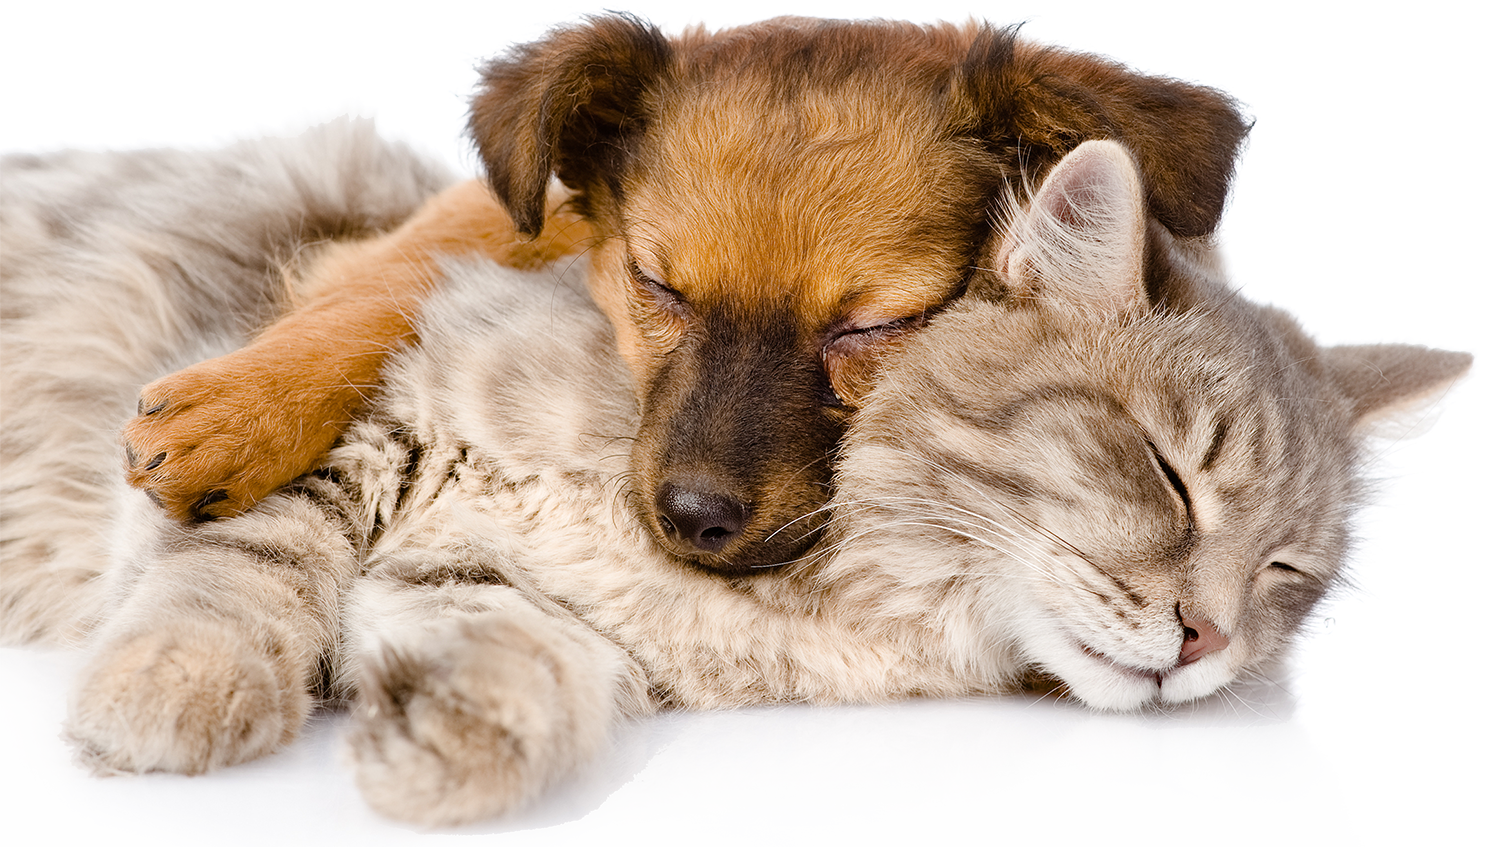 Kitten and puppy cuddling